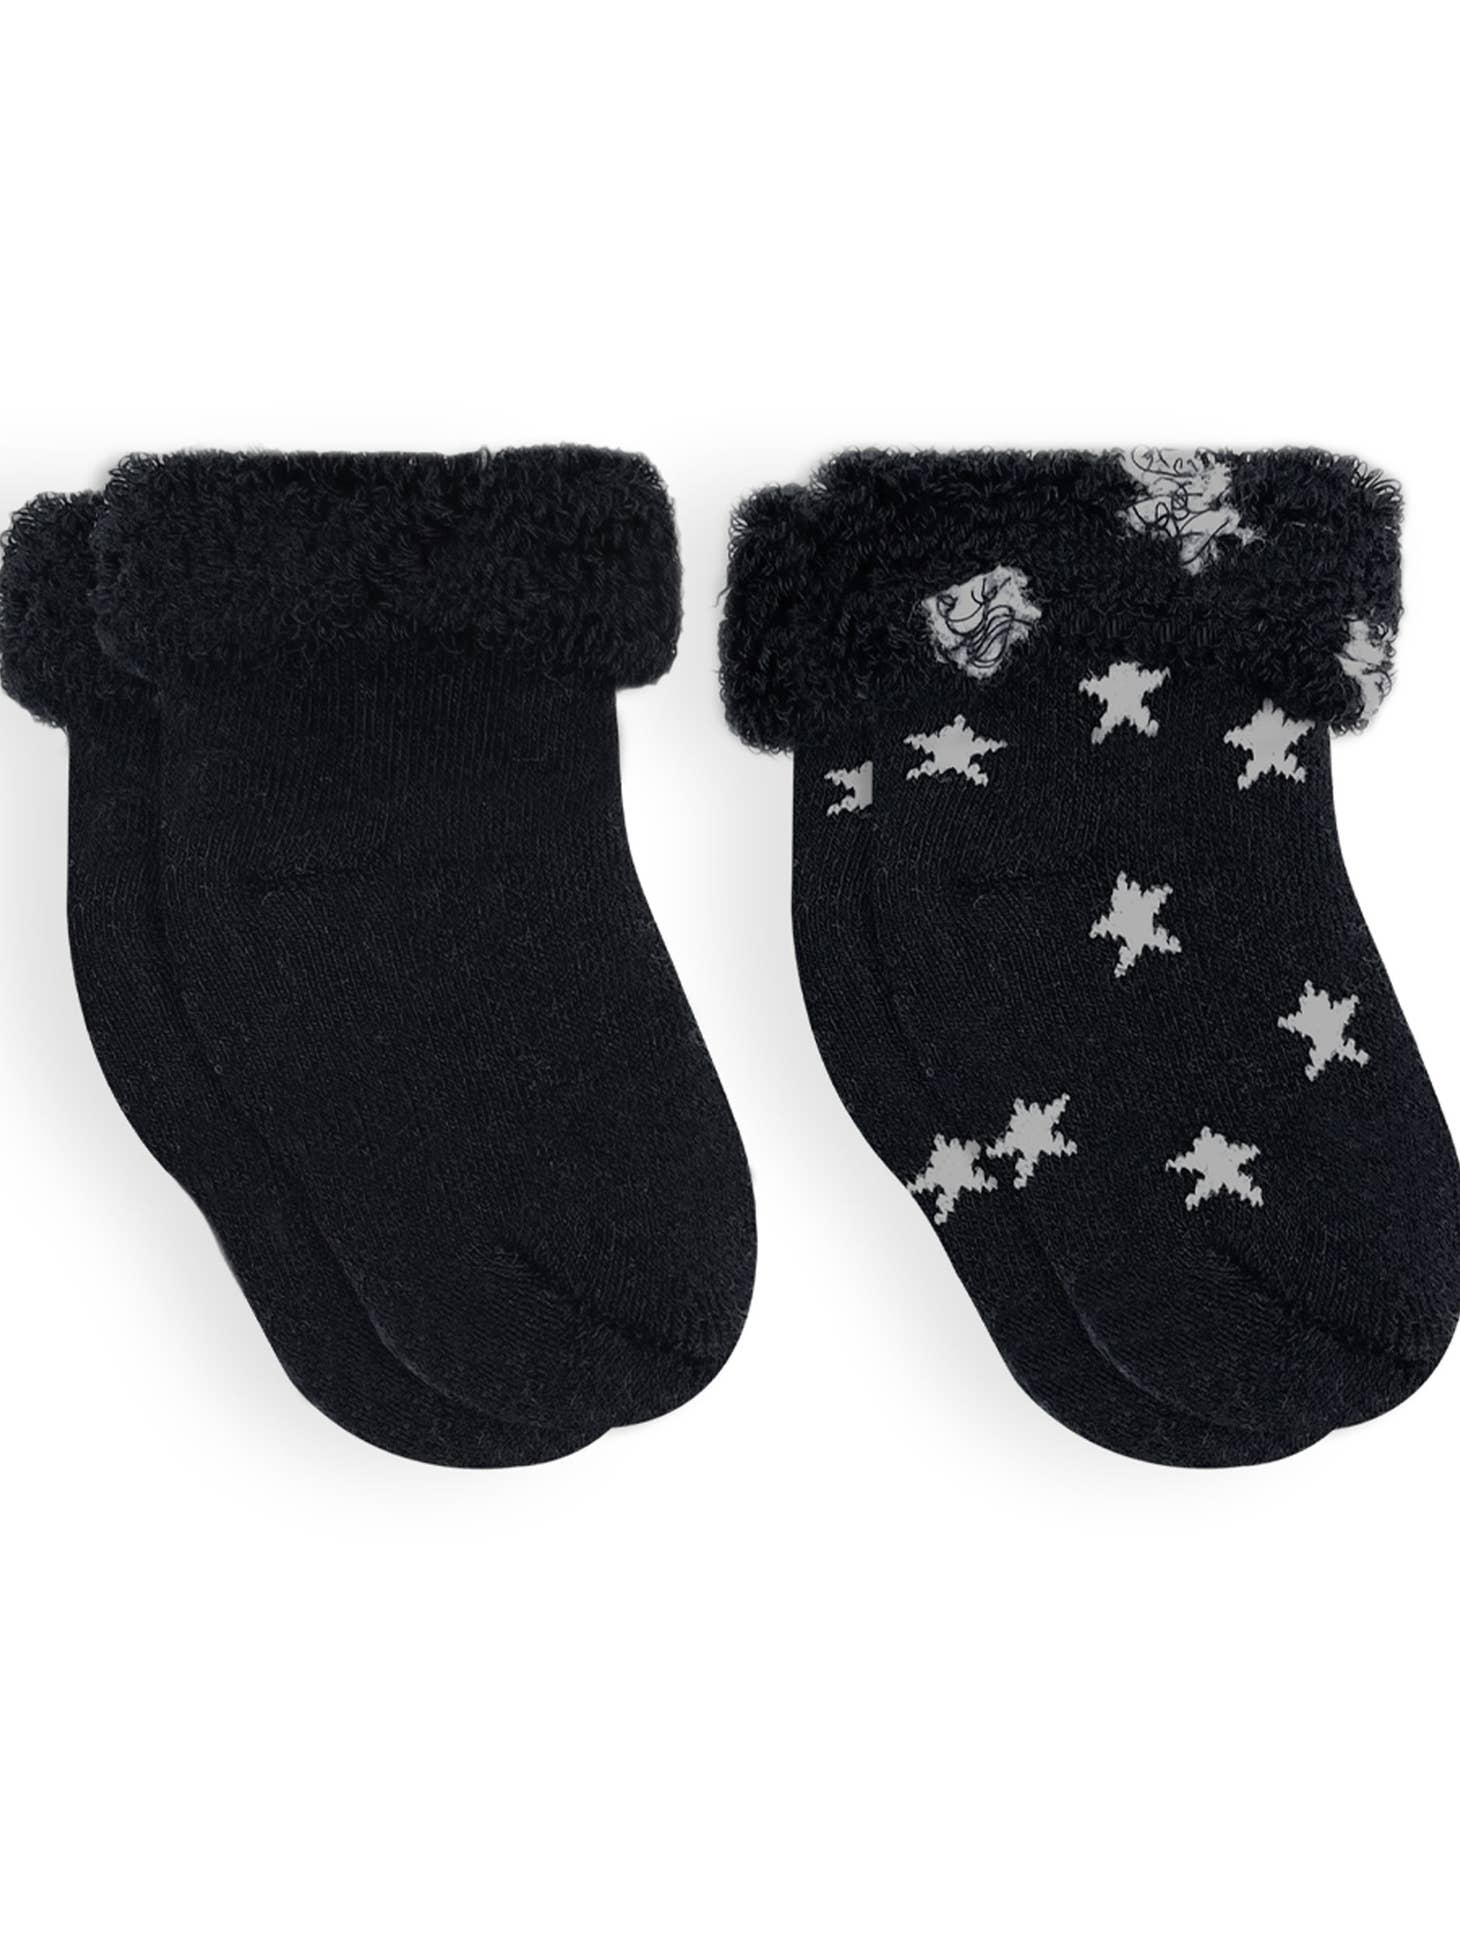 Star Terry Baby Socks - Two Pair Set - Twinkle Twinkle Little One